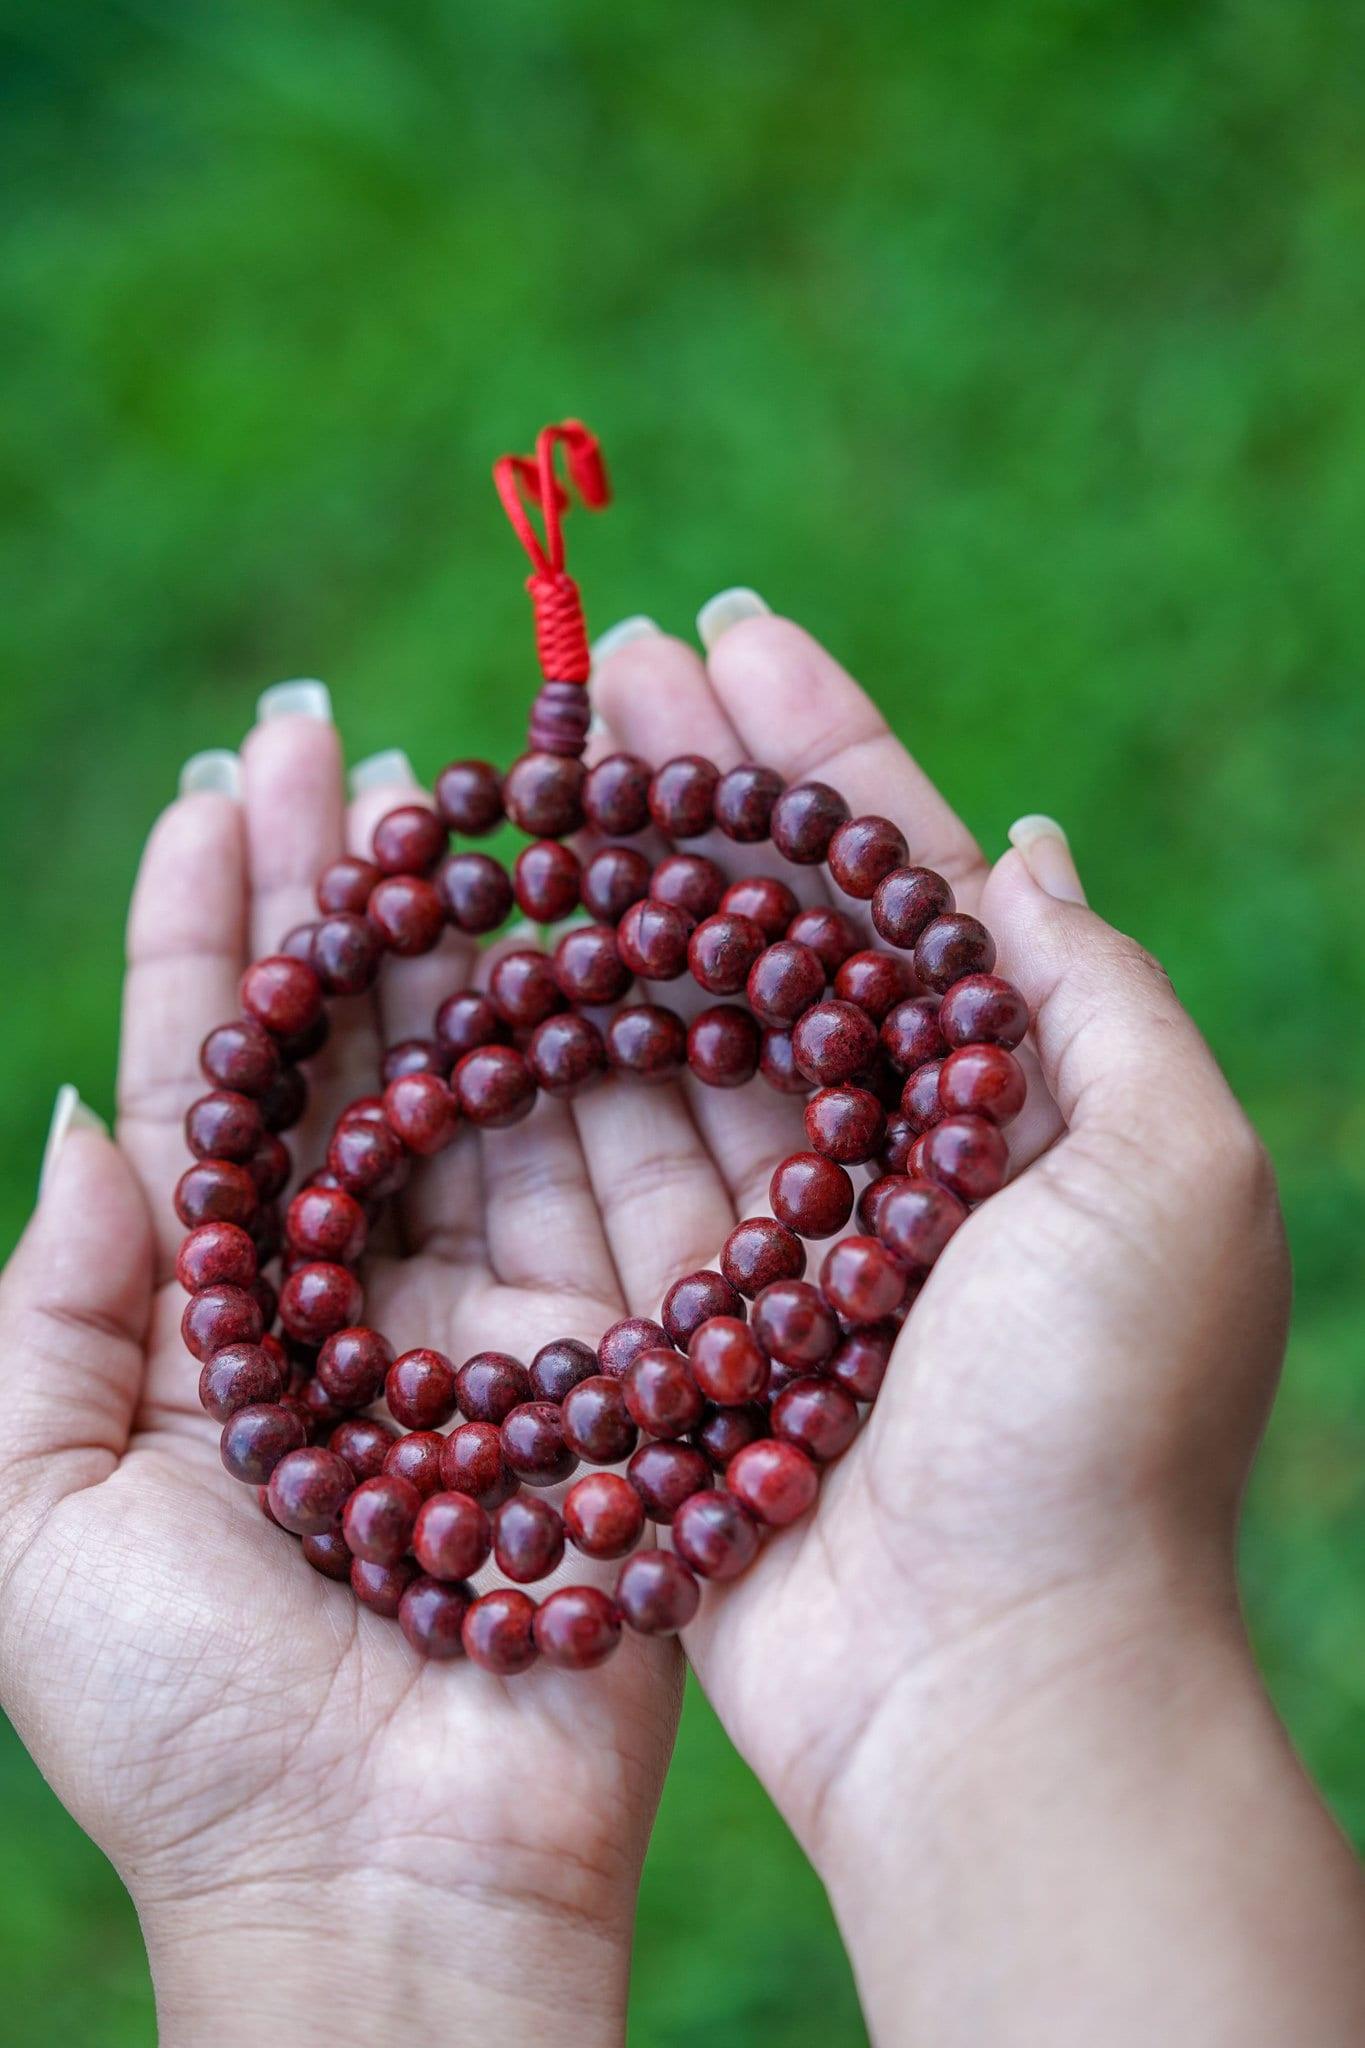 108 Beads Walnut Wood and Lapis Meditation Japa Mala – Buddha Groove